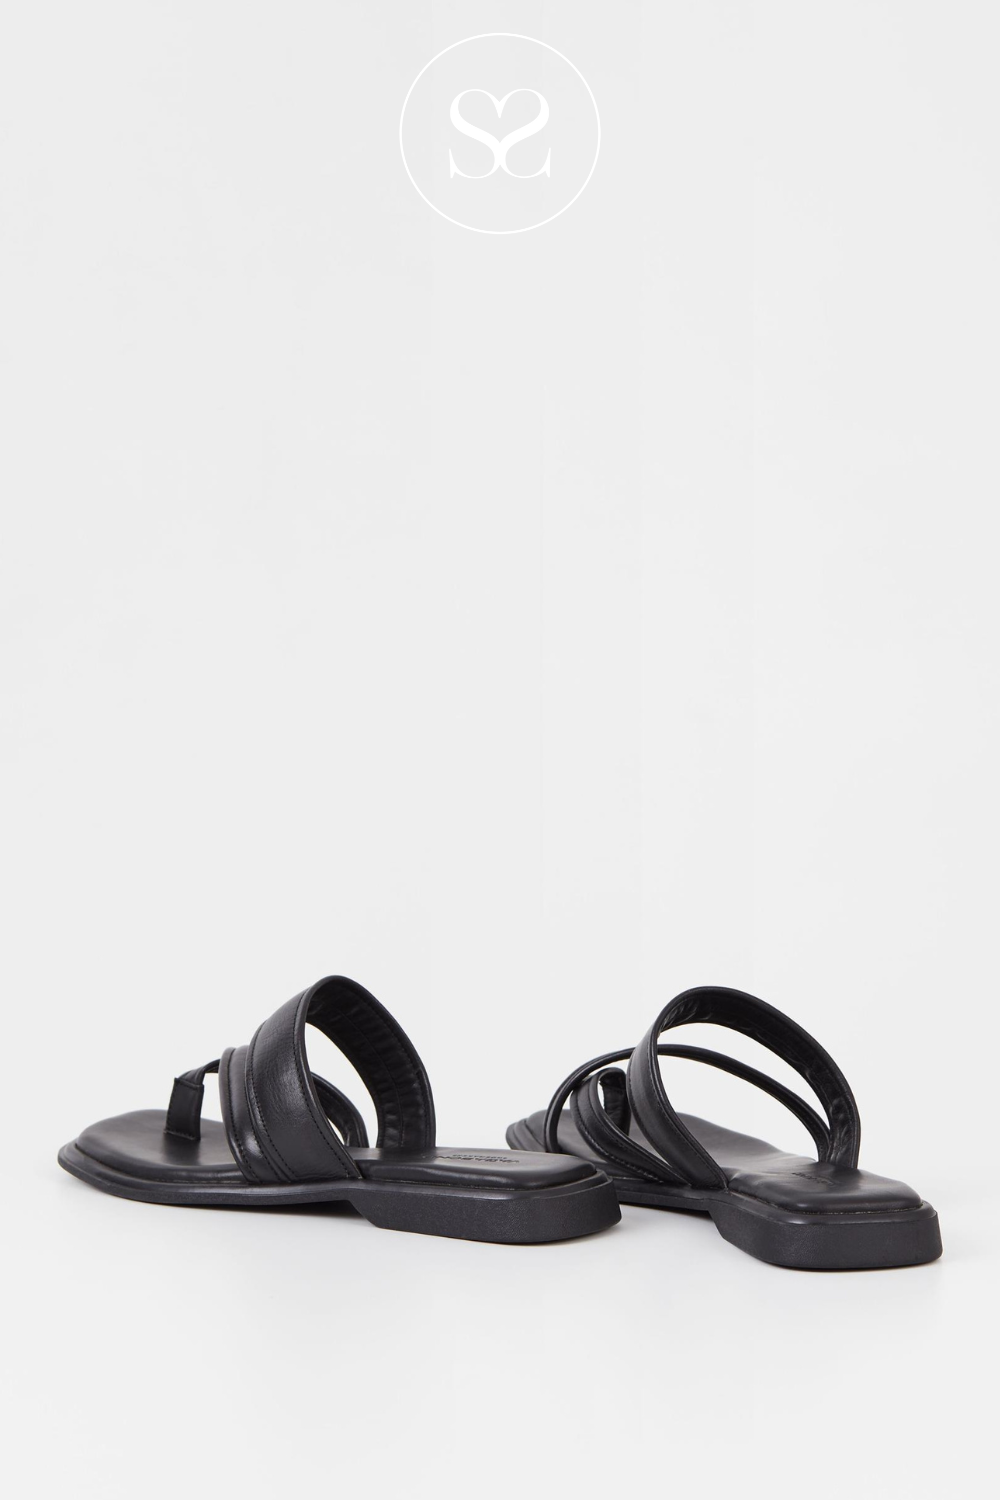 Flat black slider sandals from Vagabond